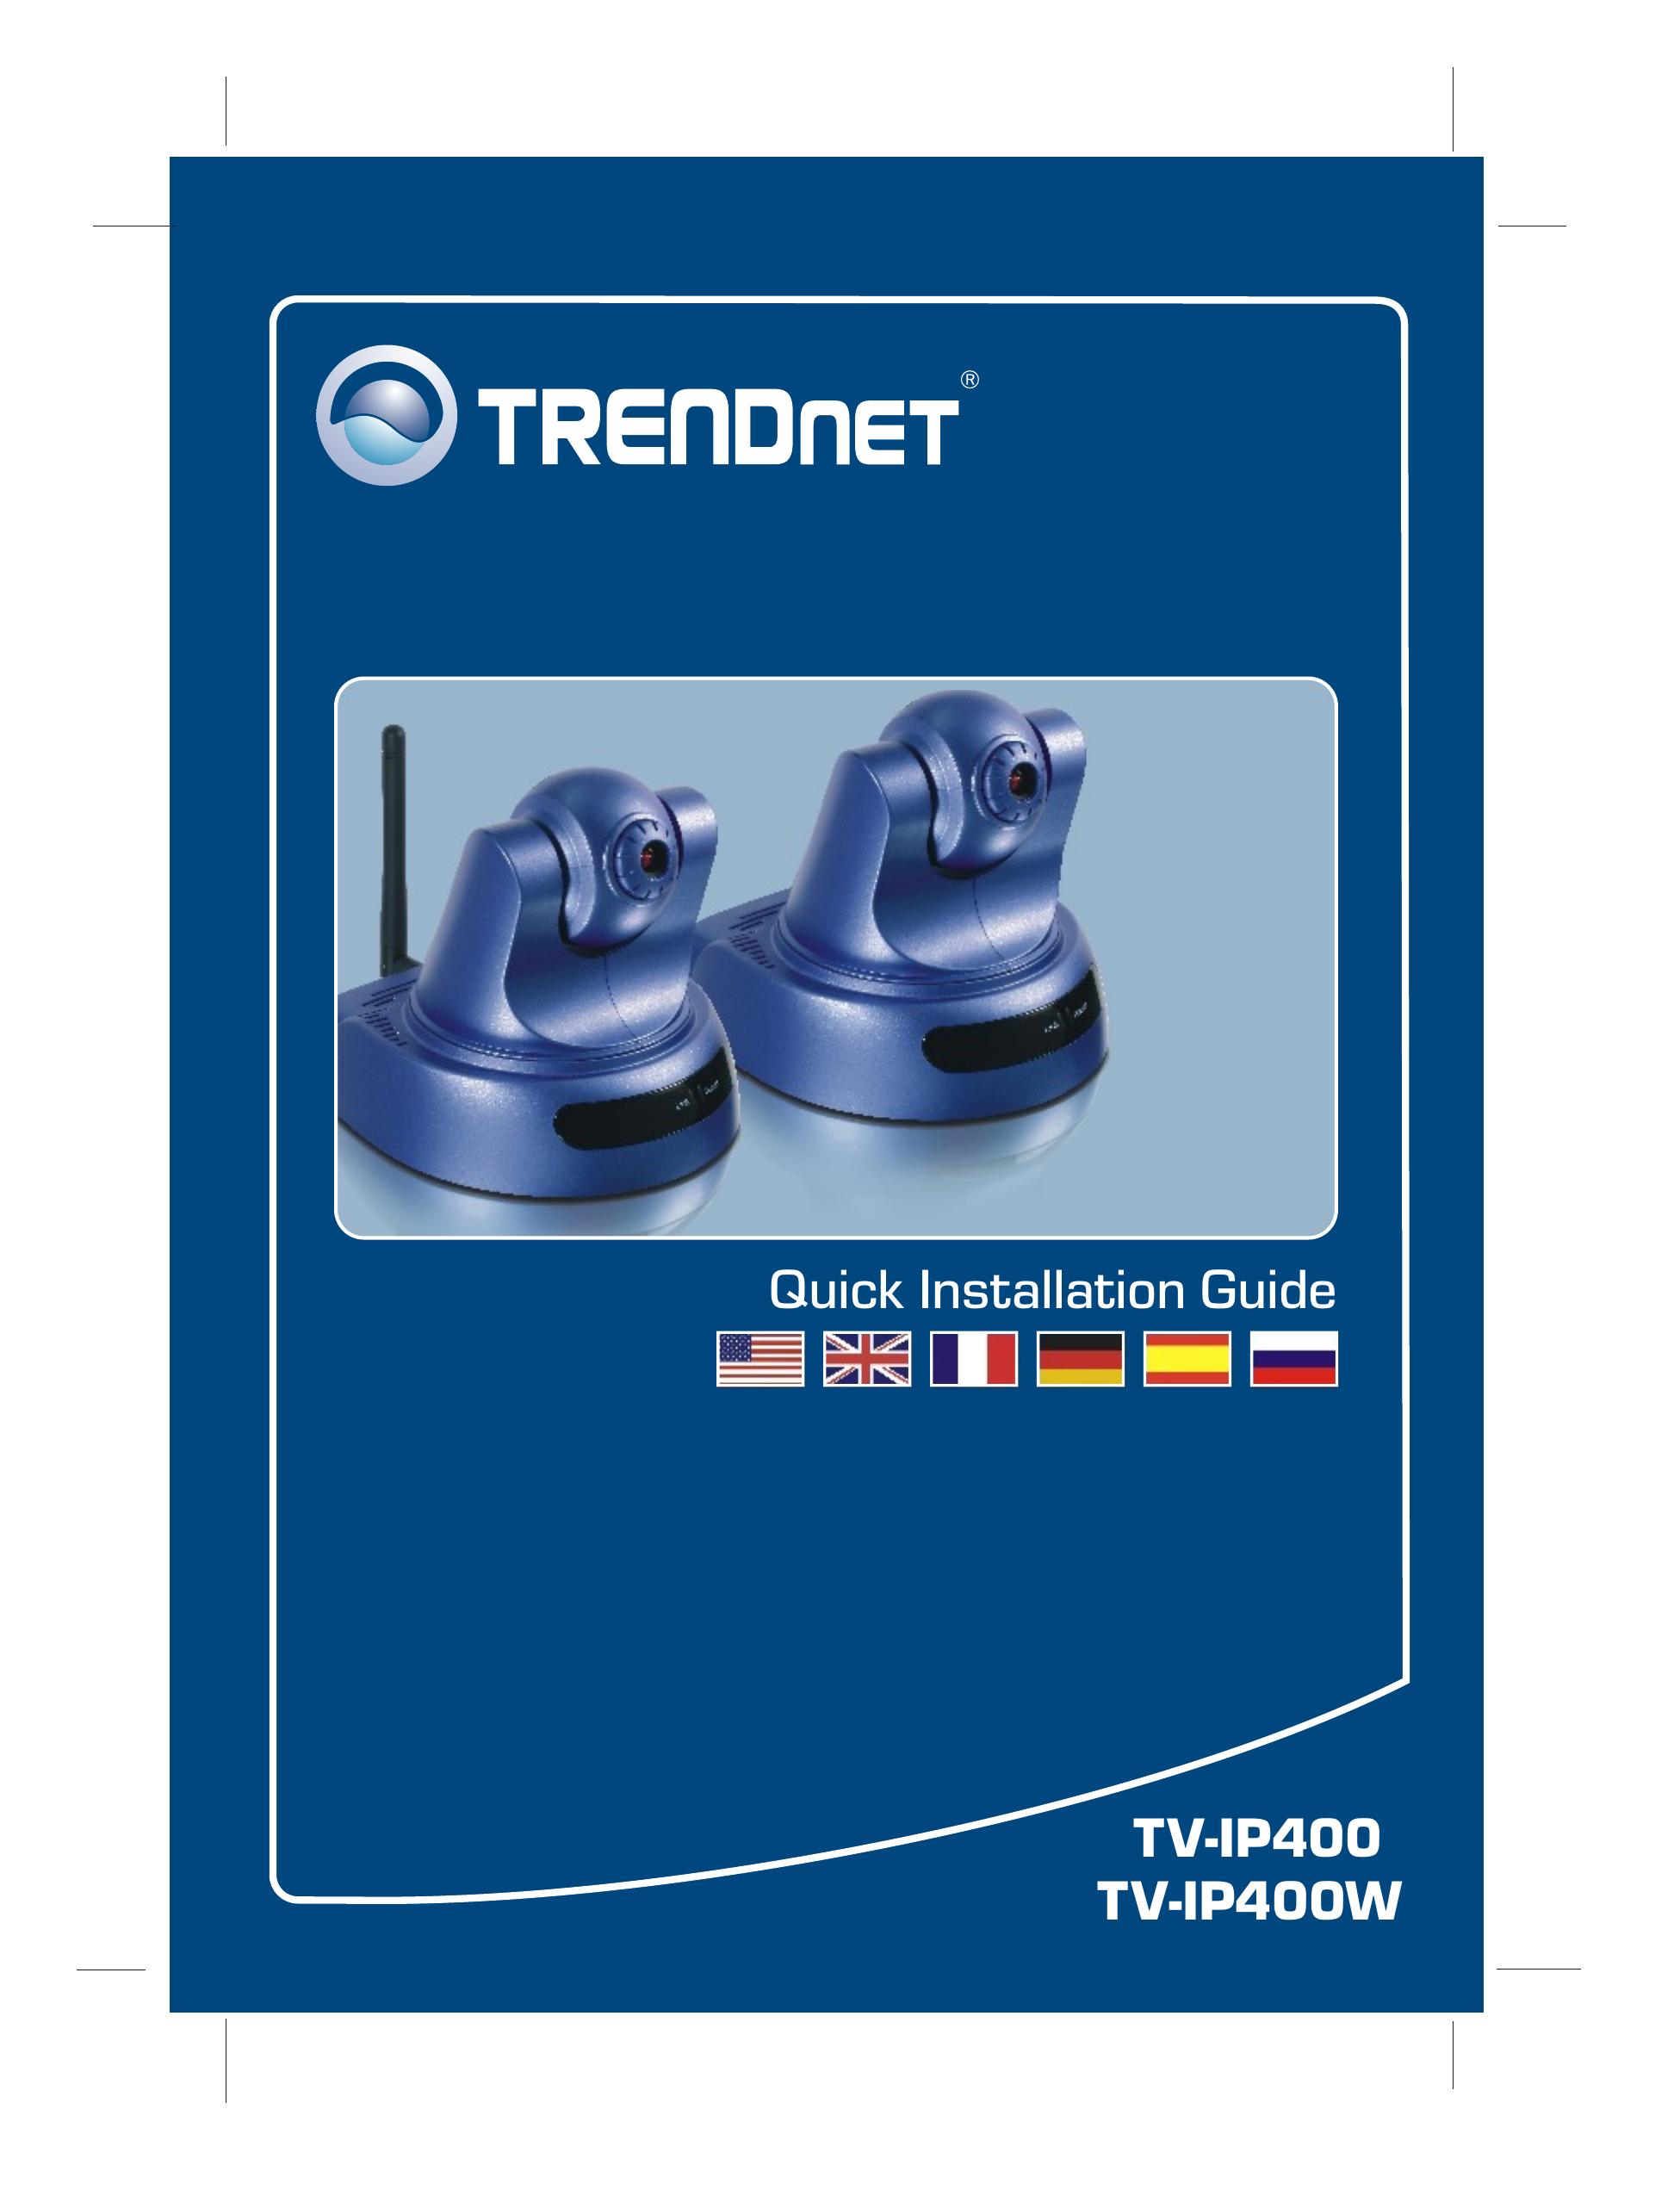 TRENDnet tv-ip400w Security Camera User Manual